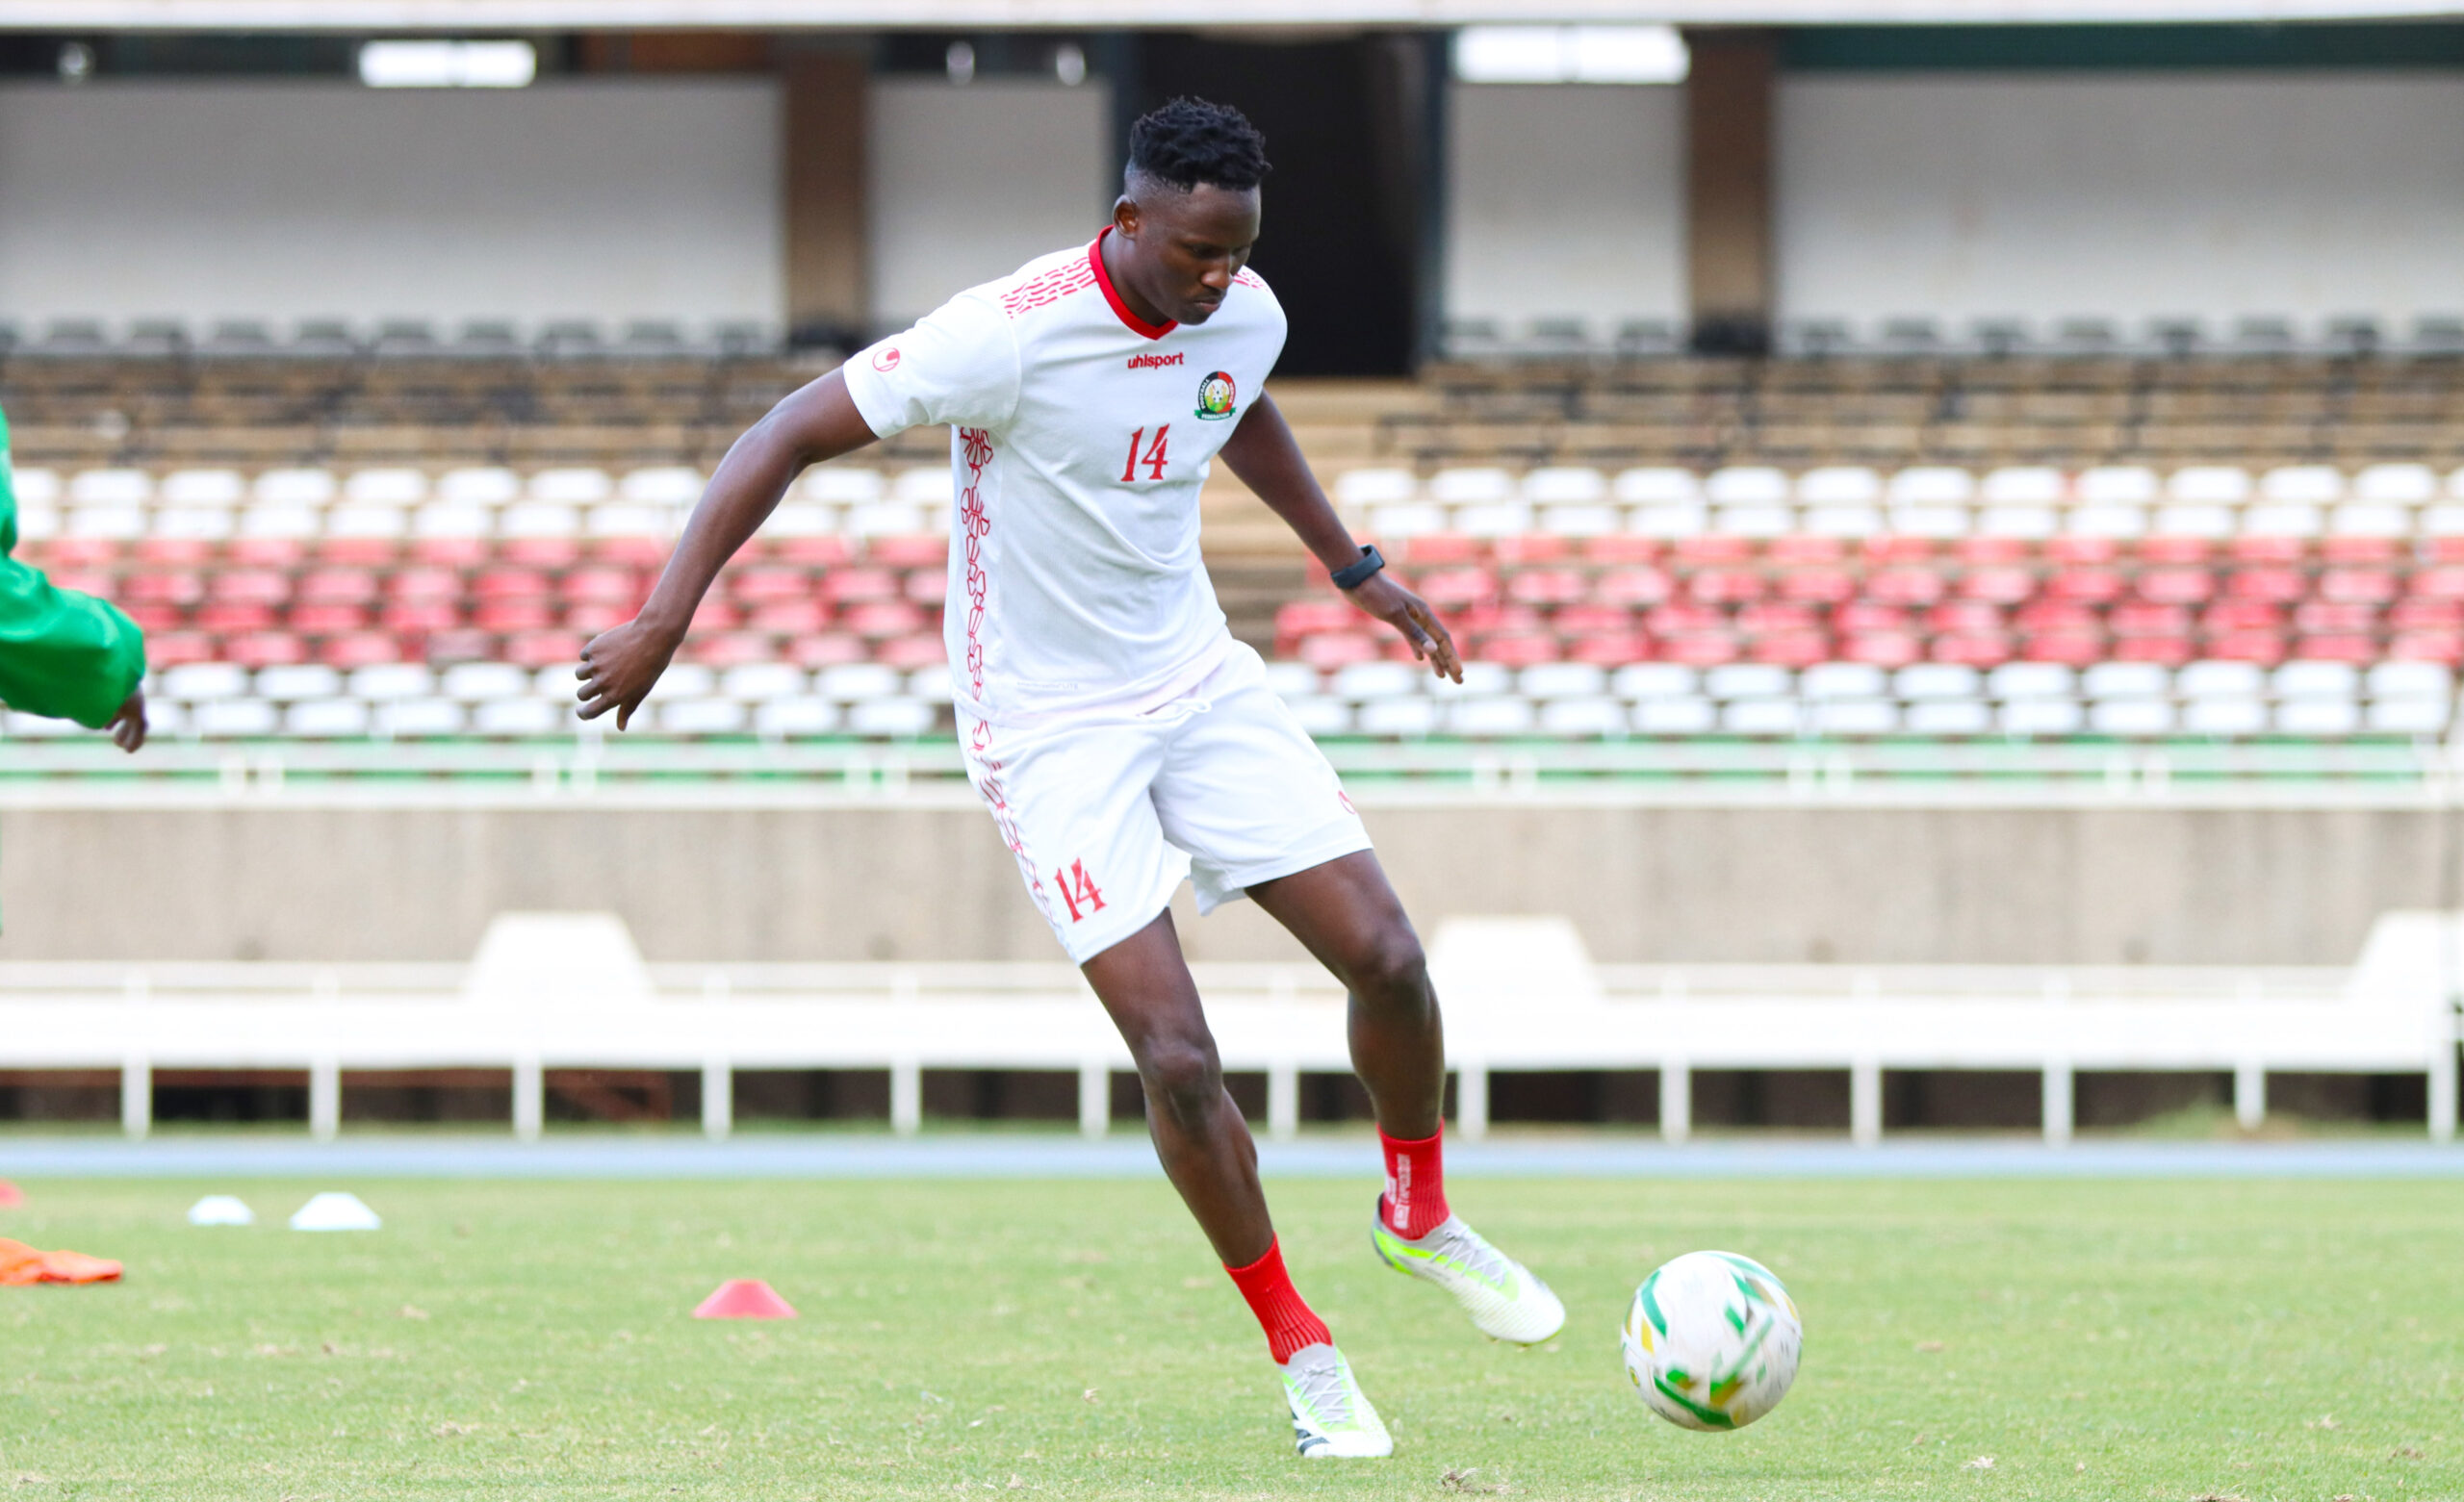 Harambee Stars captain Olunga wins Qatar League Golden Boot